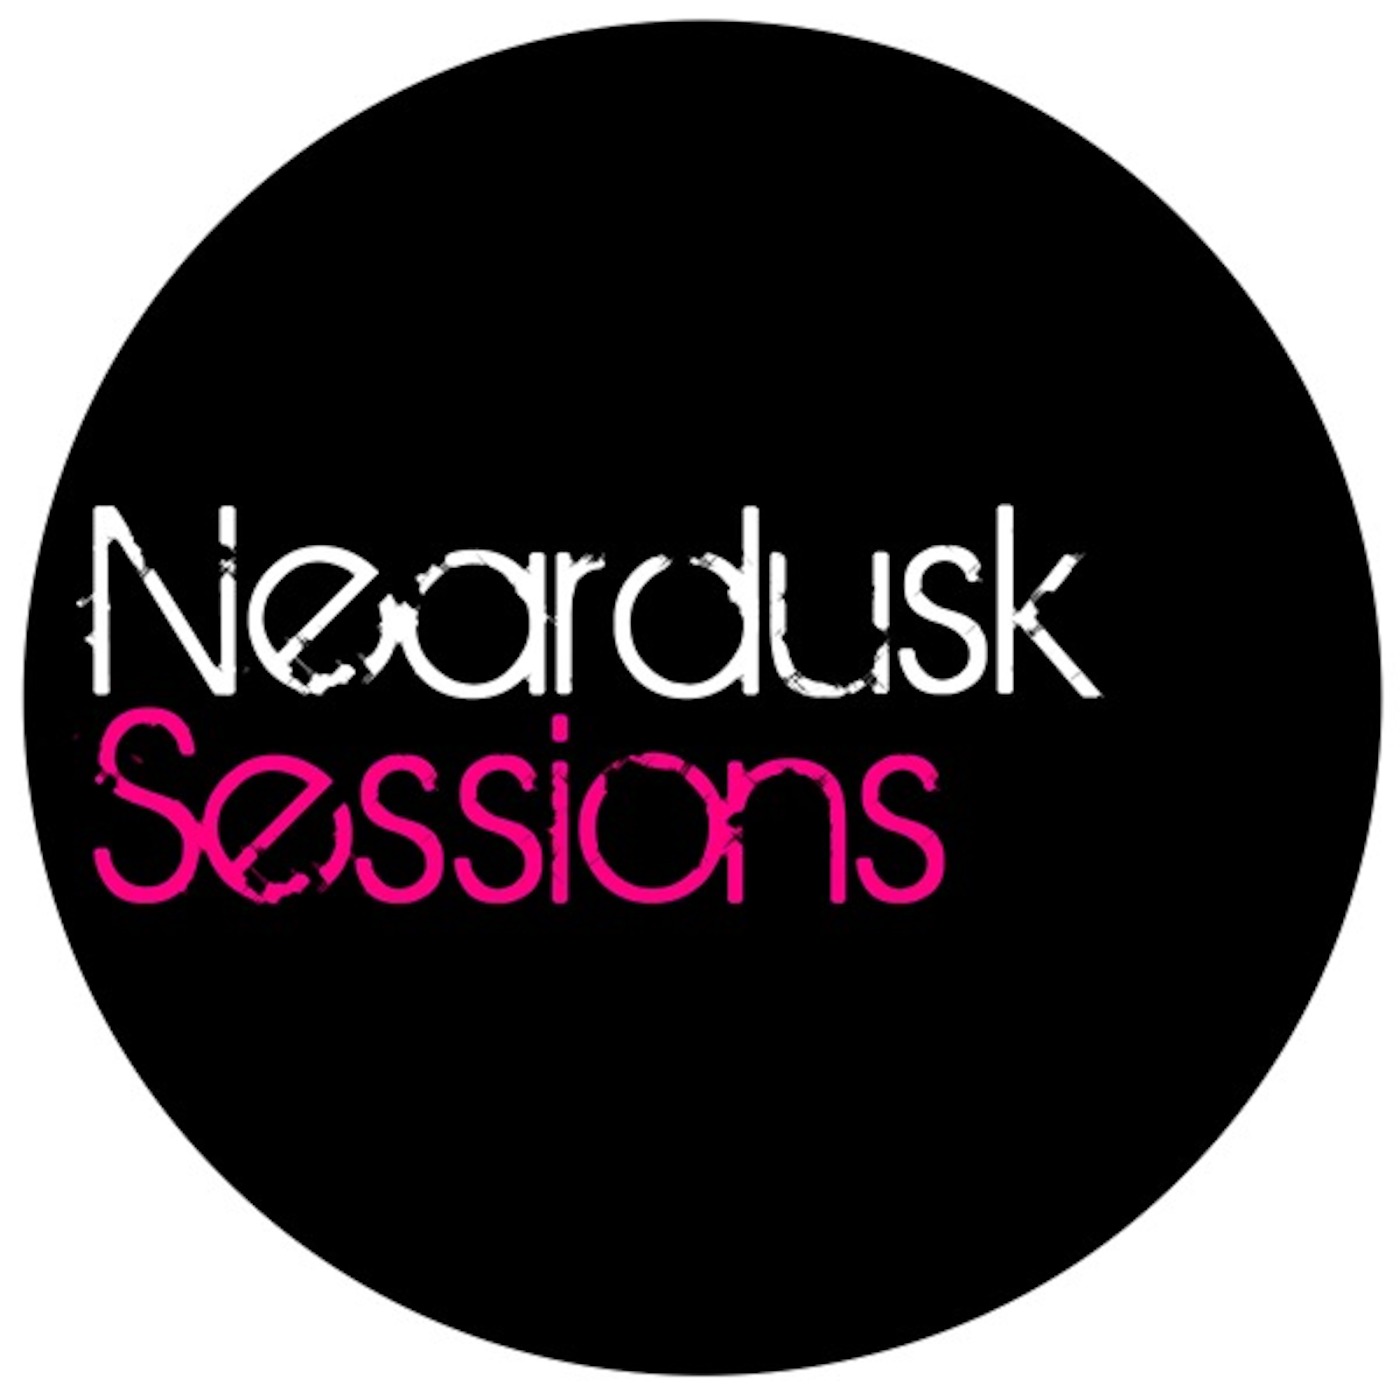 Neardusk Sessions // Session 2 : Omar.